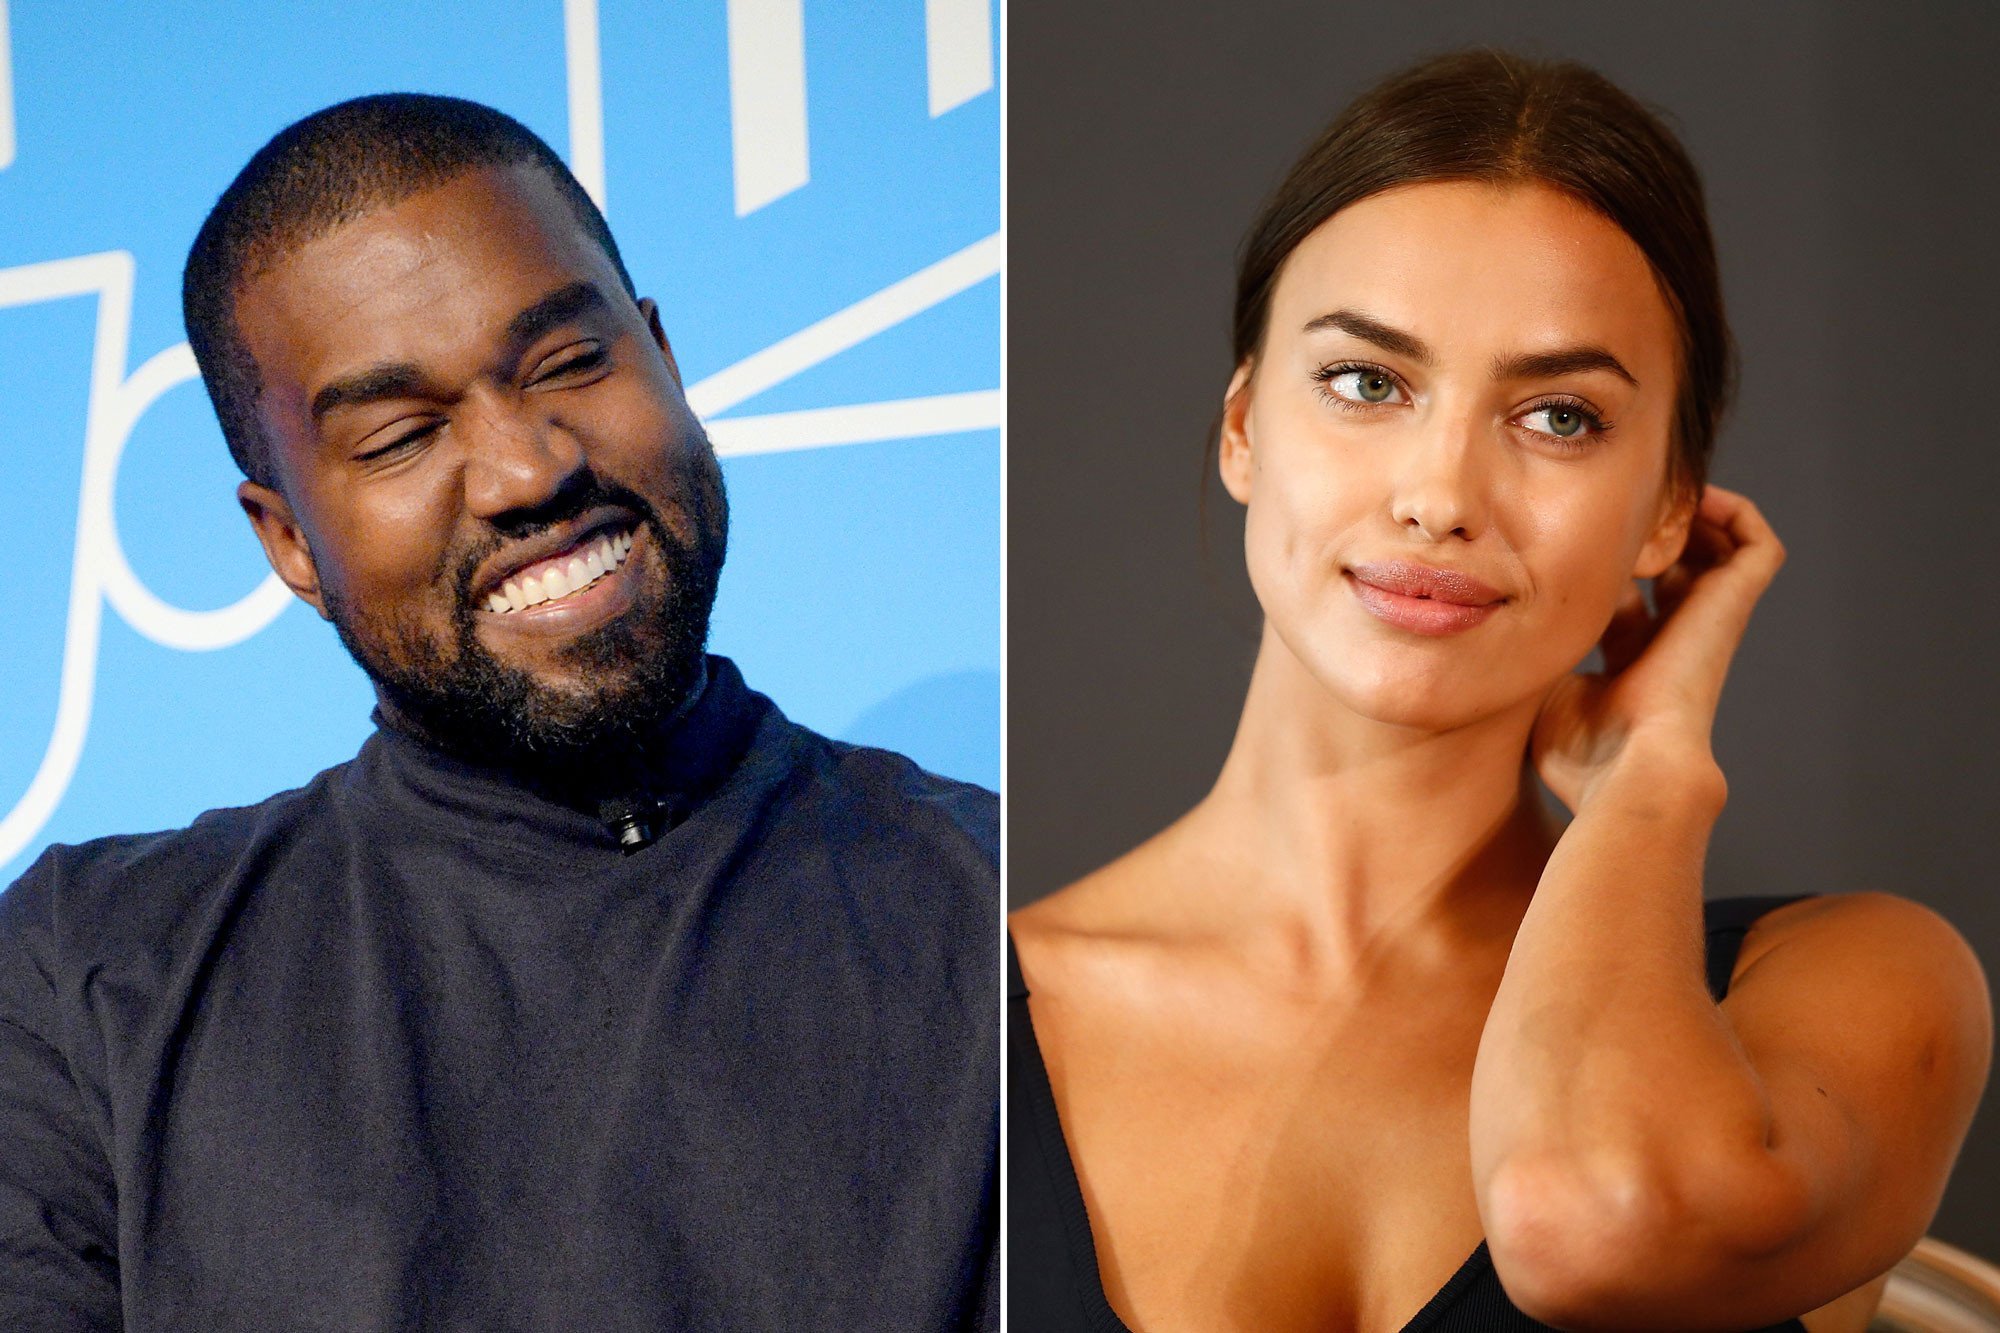 Kanye West and Irina Shayk are dating